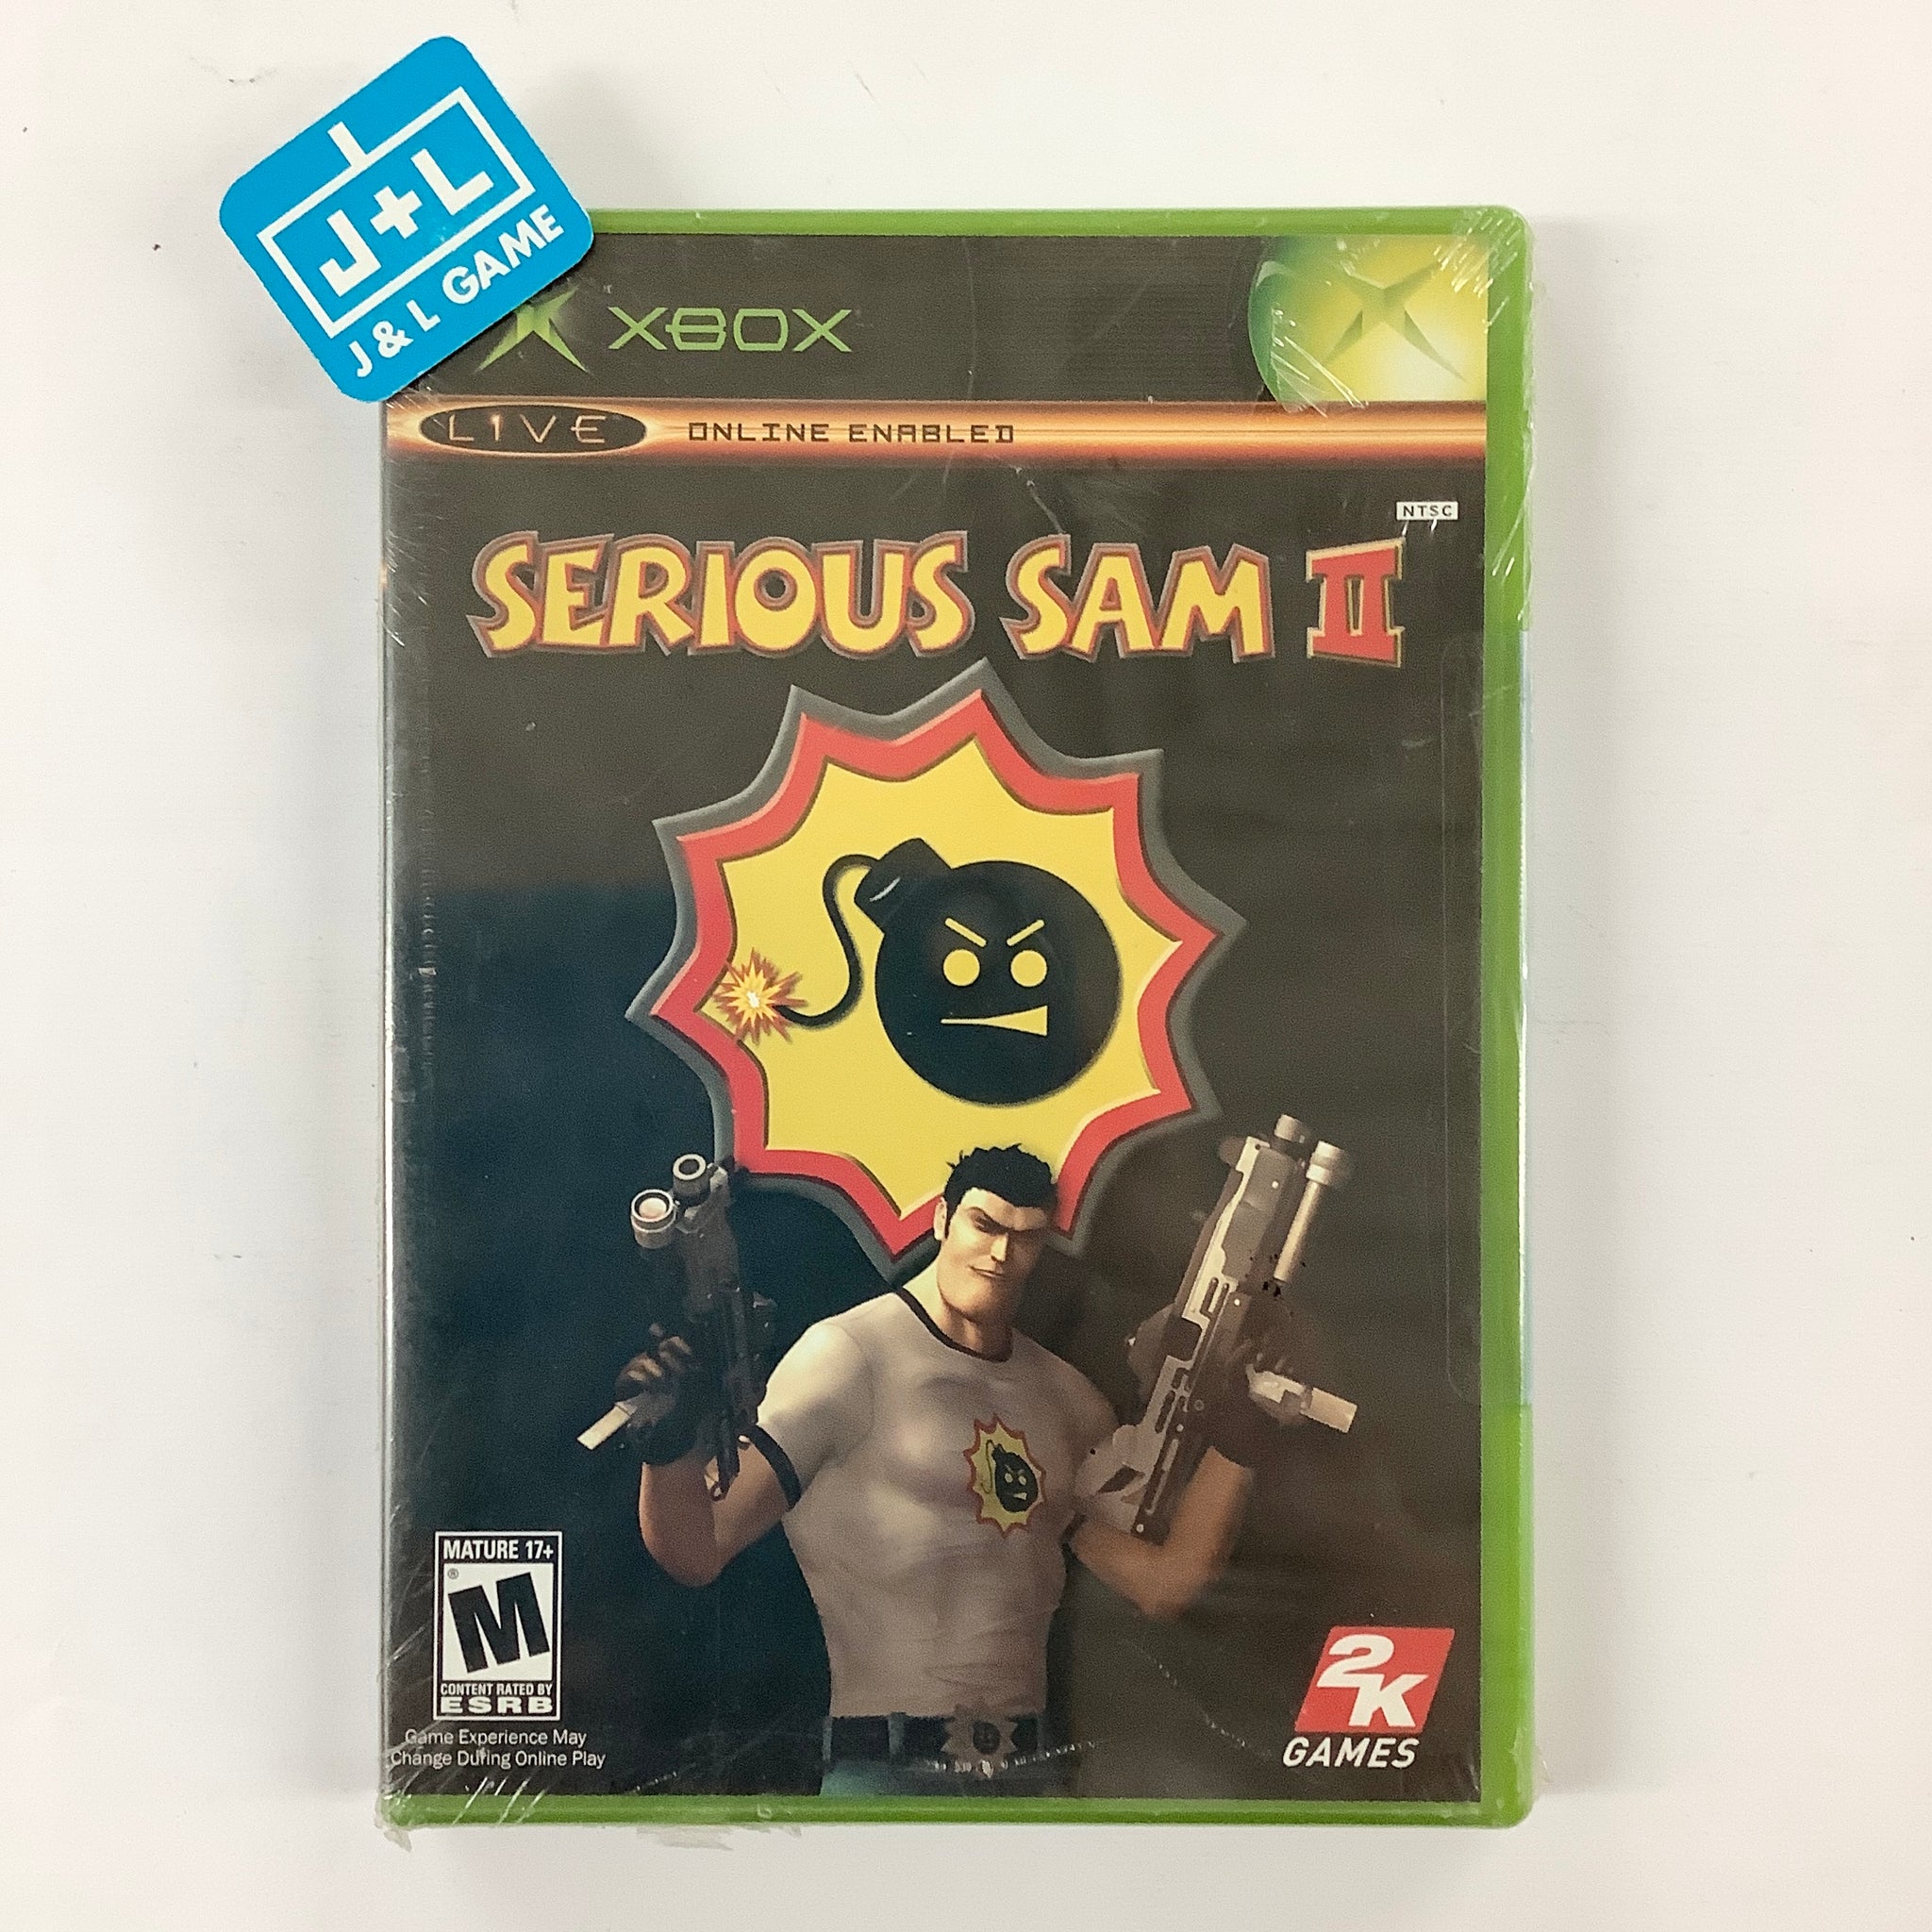 Serious Sam II - (XB) Xbox Video Games 2K Games   